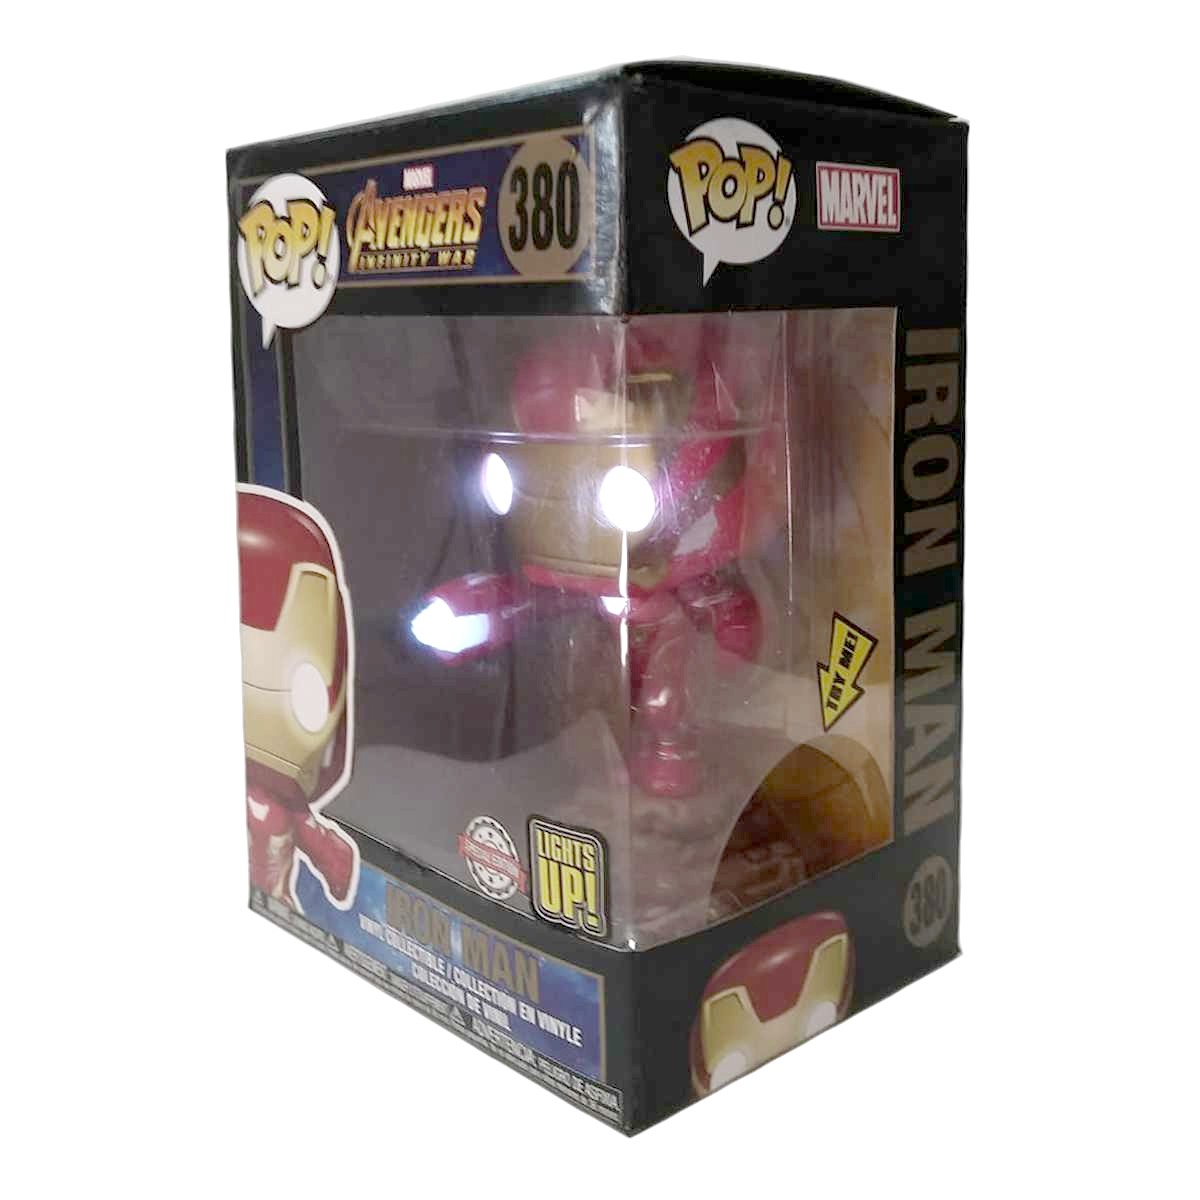 Funko Pop! Movies Avengers Infinity War Iron Man com led vinyl figure número 380